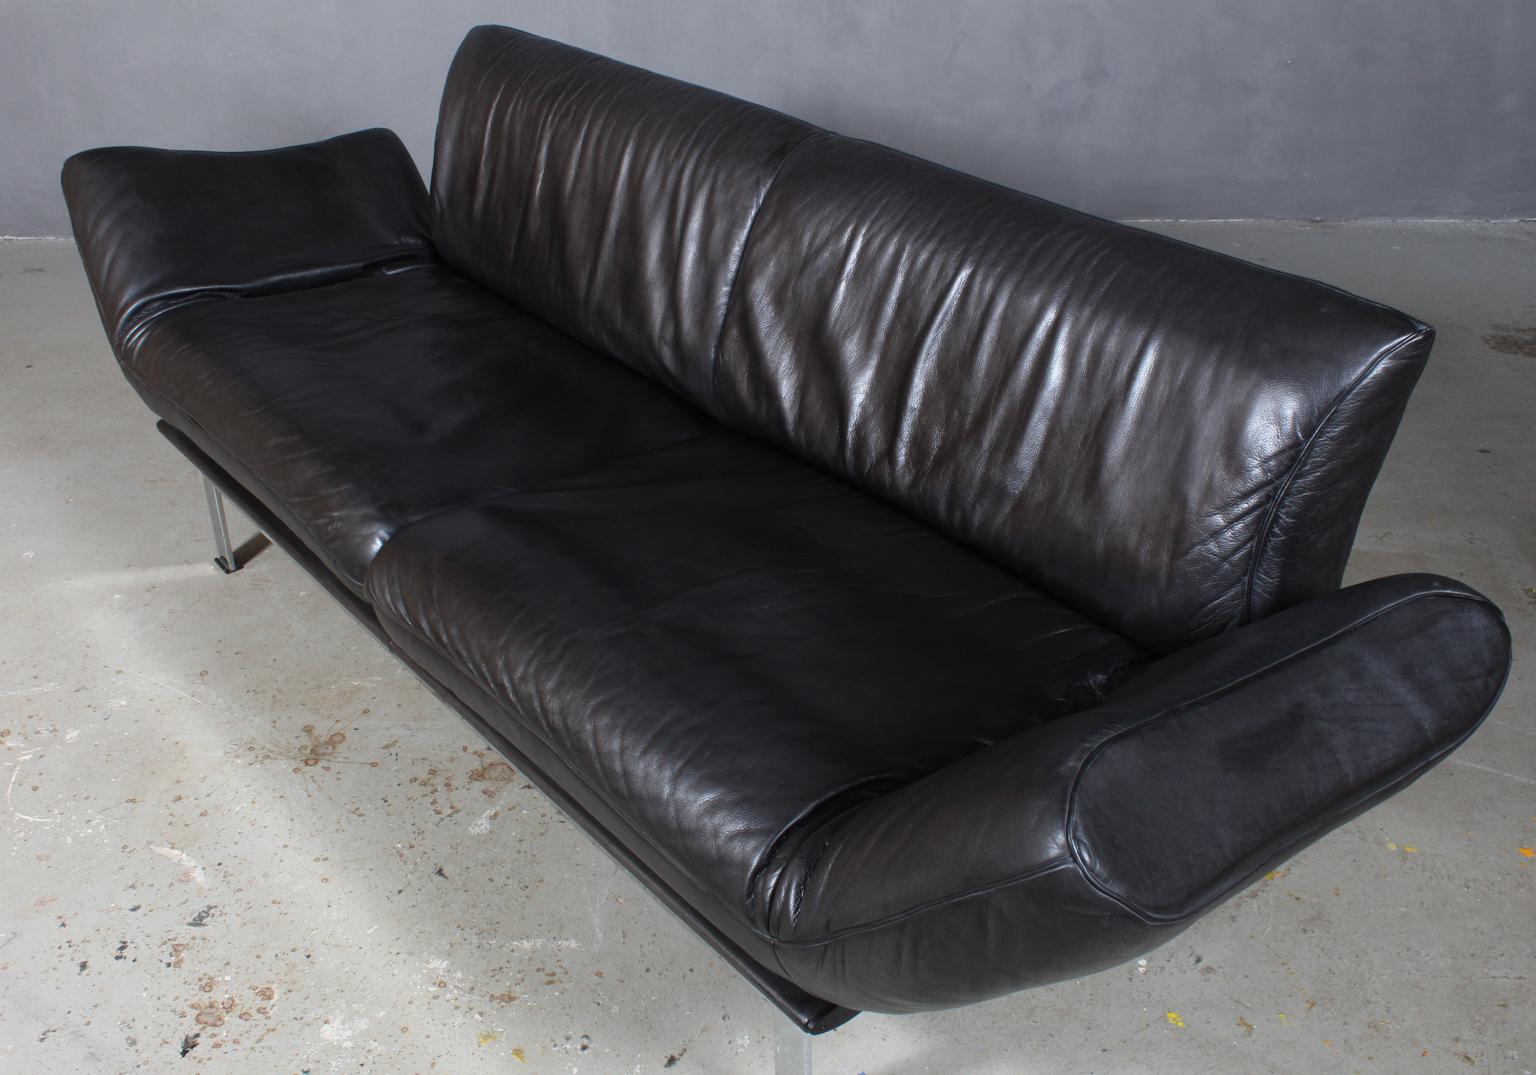 Reto Frigg for De Sede multi function sofa in original black leather.

Frame of steel.

Model DS - 140, made by De Sede.